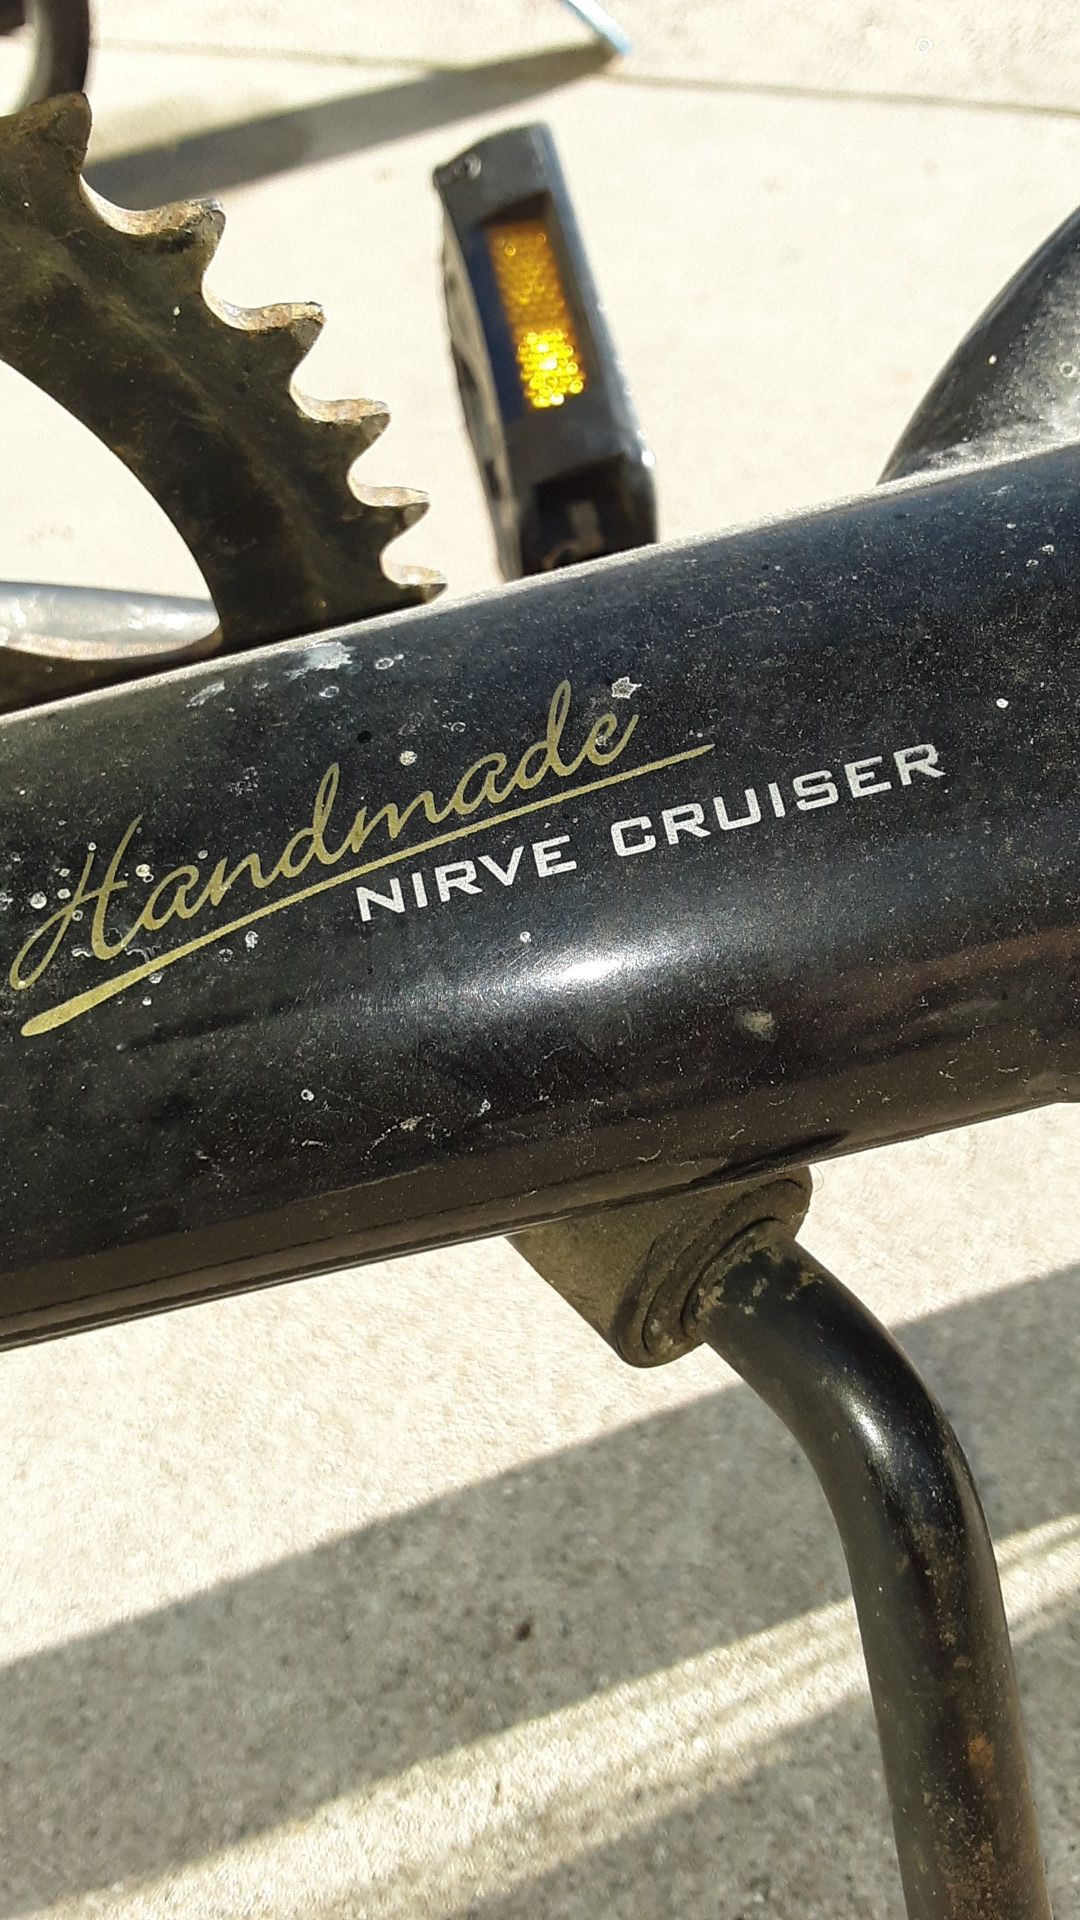 The skurvy bike nirve cruiser